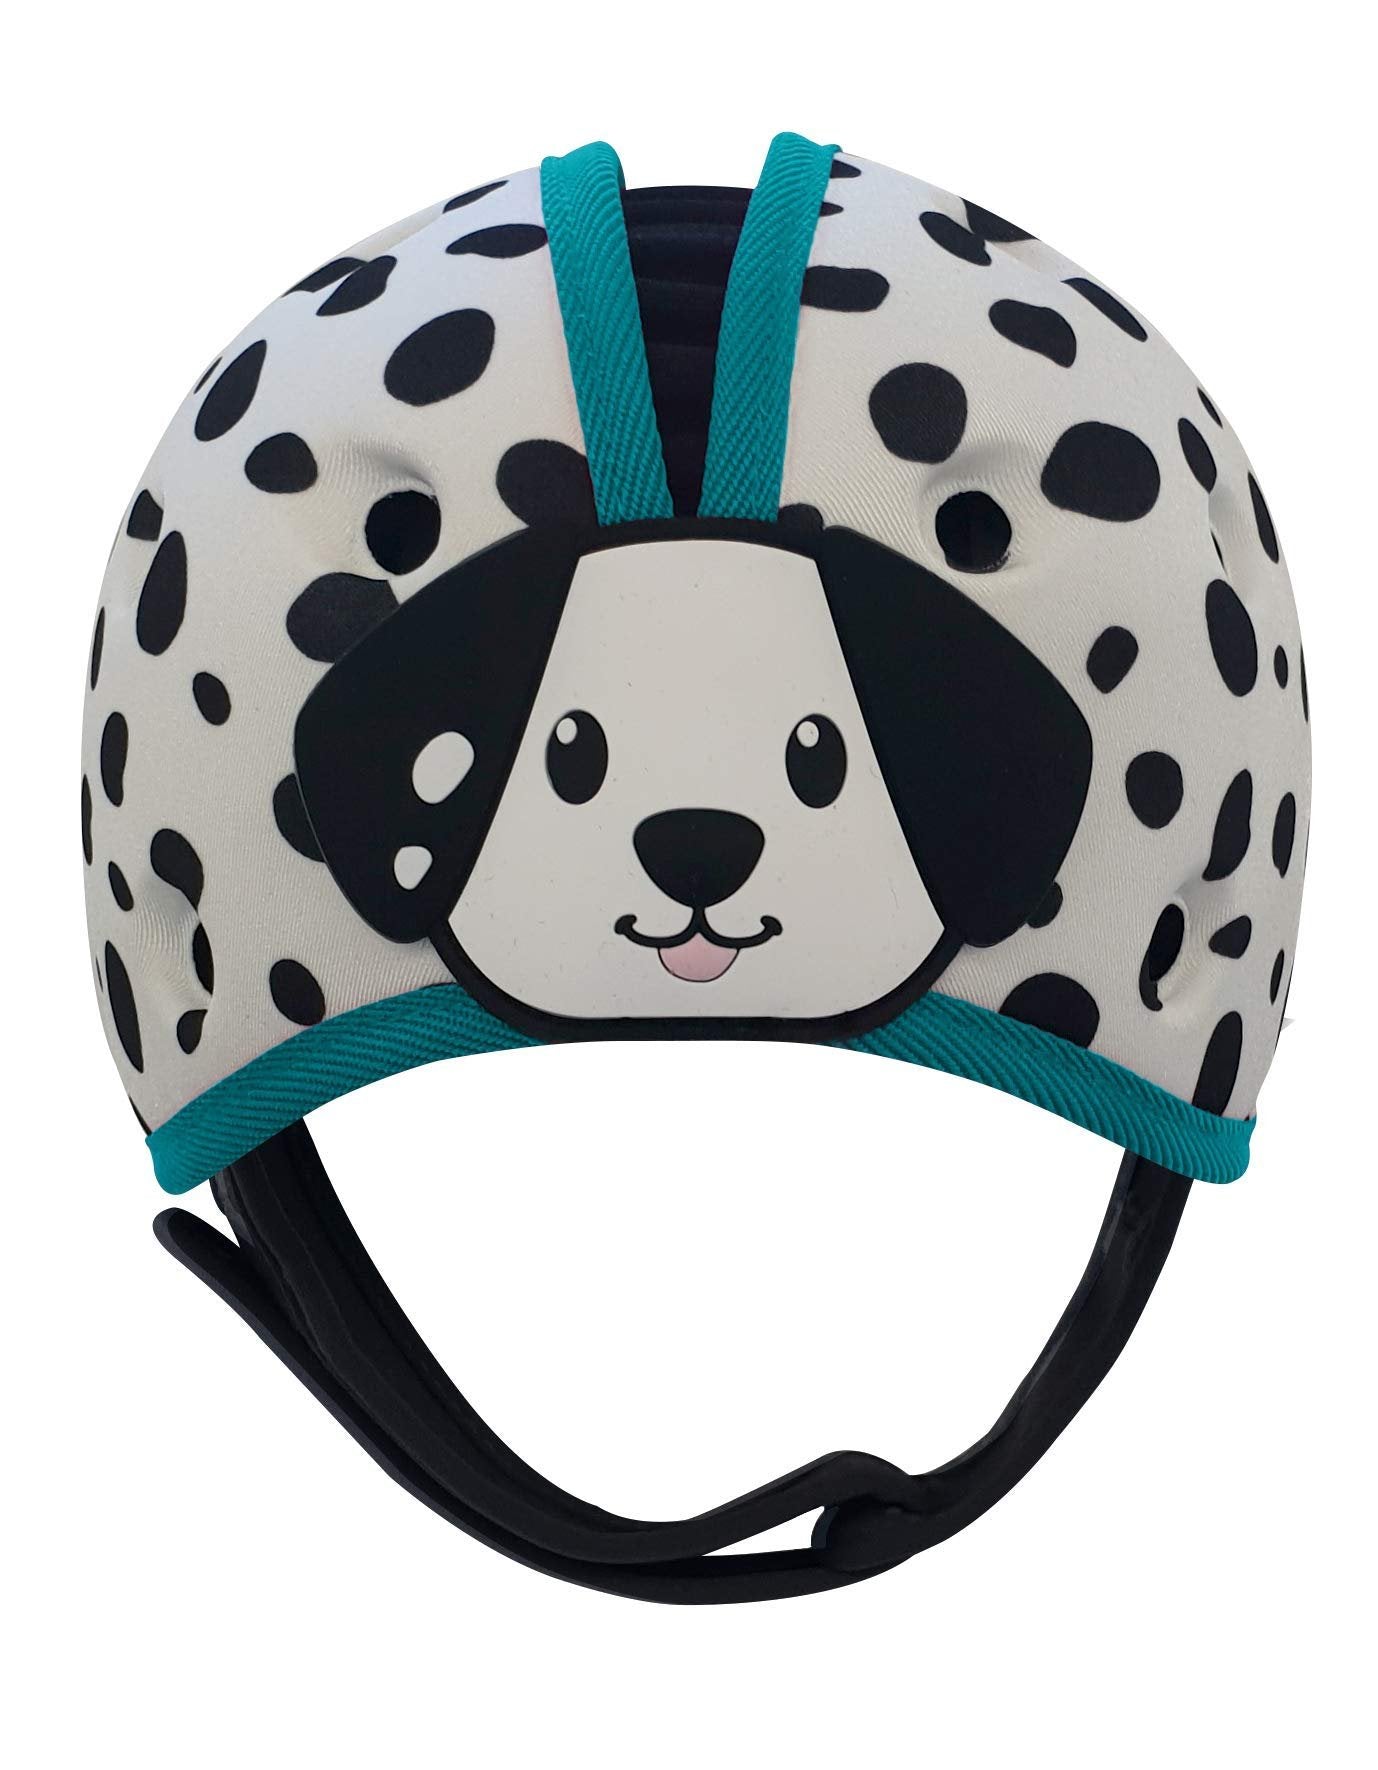 SafeheadBABY Infant Safety Helmet - One Size Dalmatian Blue - Crawling & Walking Protection